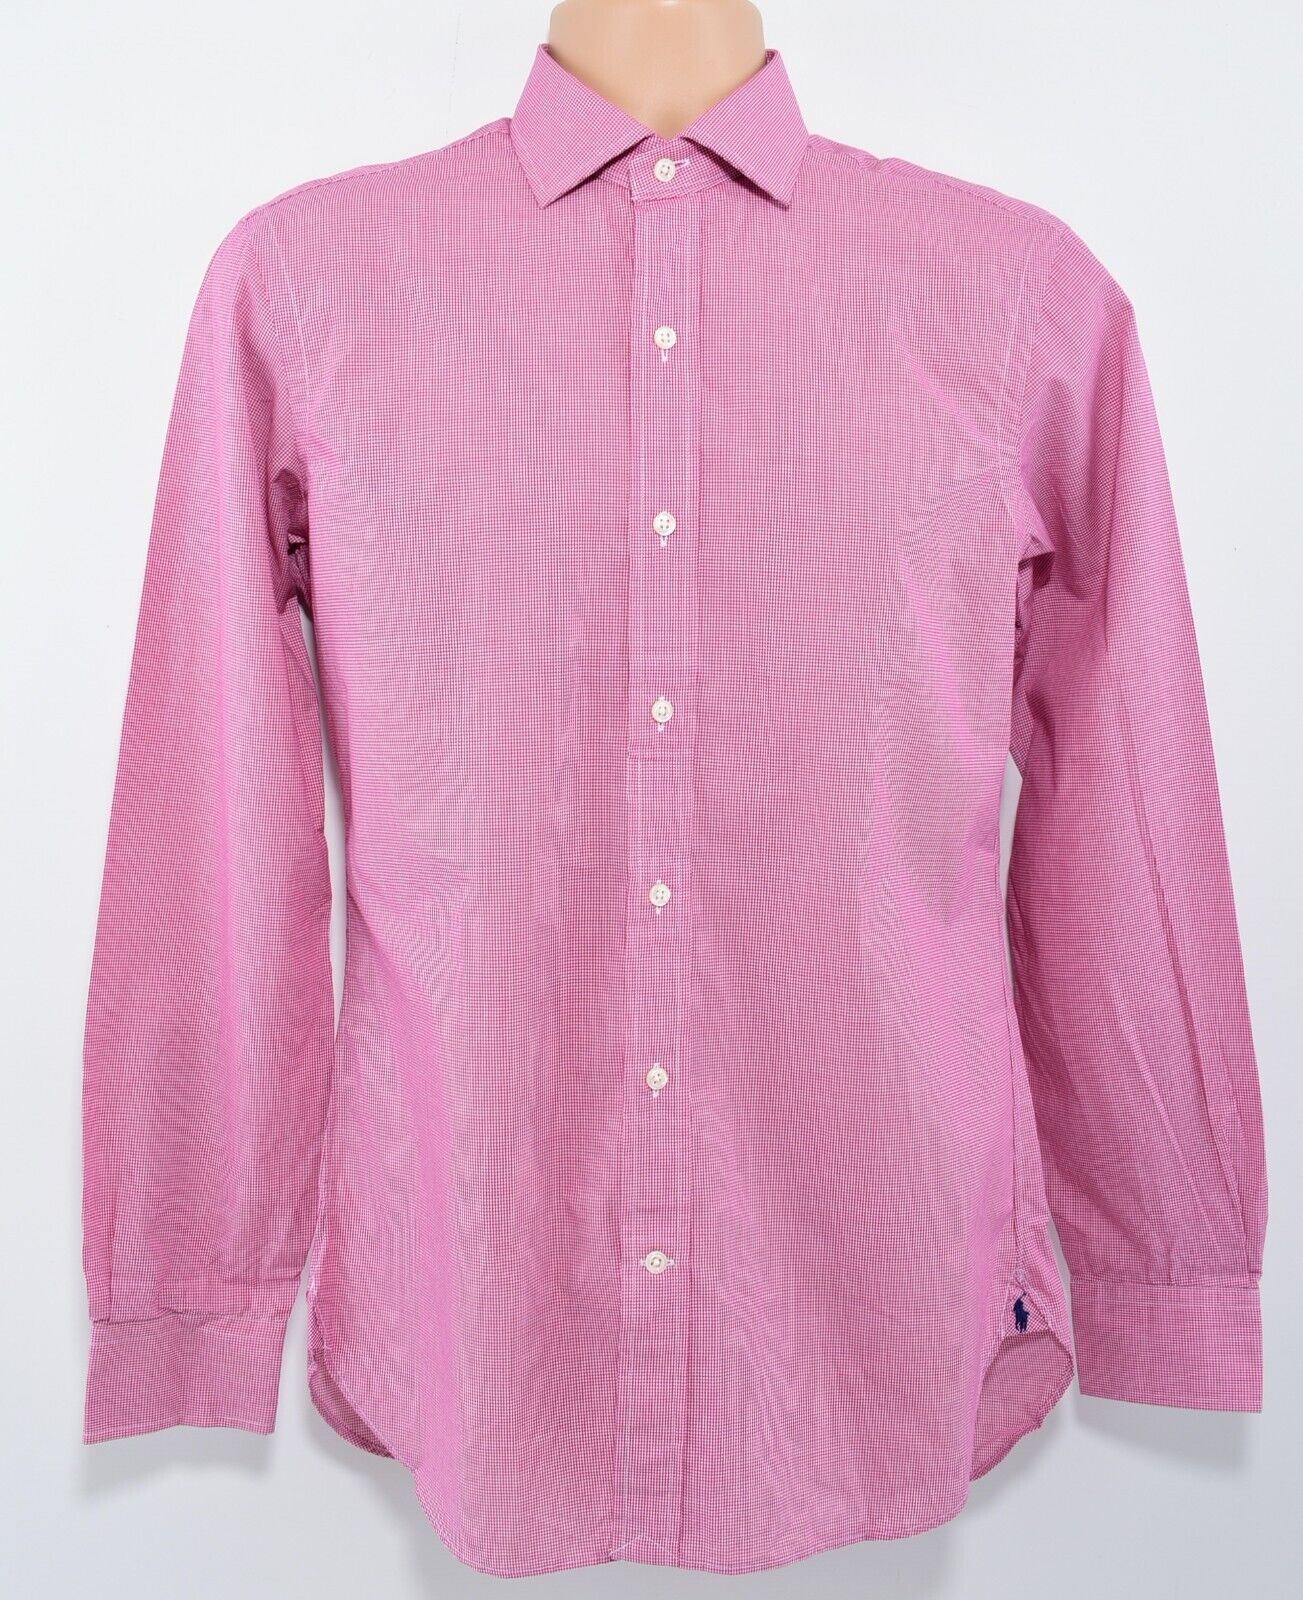 POLO RALPH LAUREN Mens Long Sleeve Pink Checked Shirt, size collar 14.5"